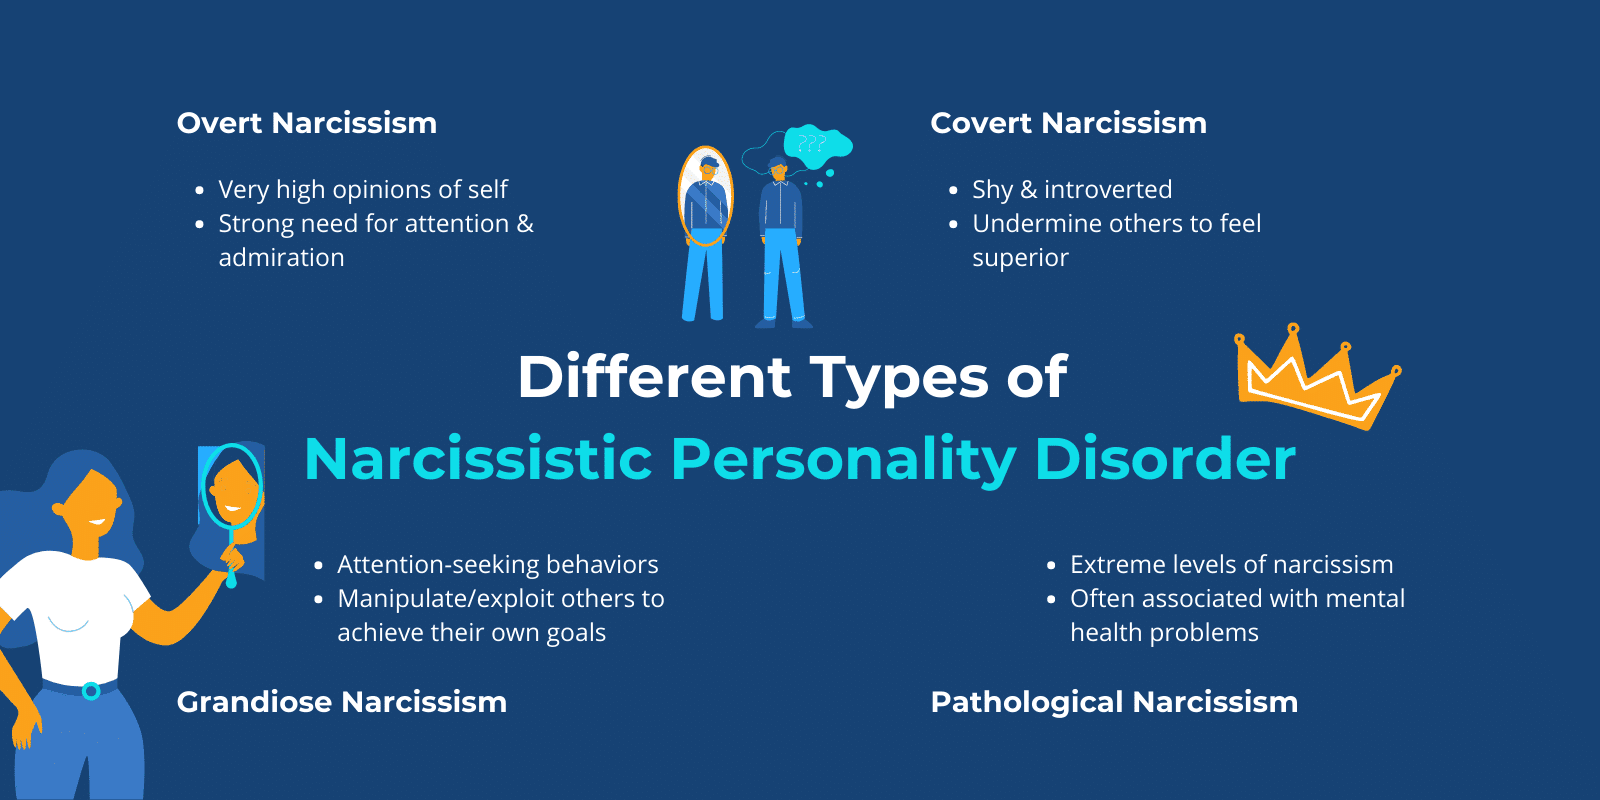 Narcissism Is Not Just High Self-Esteem